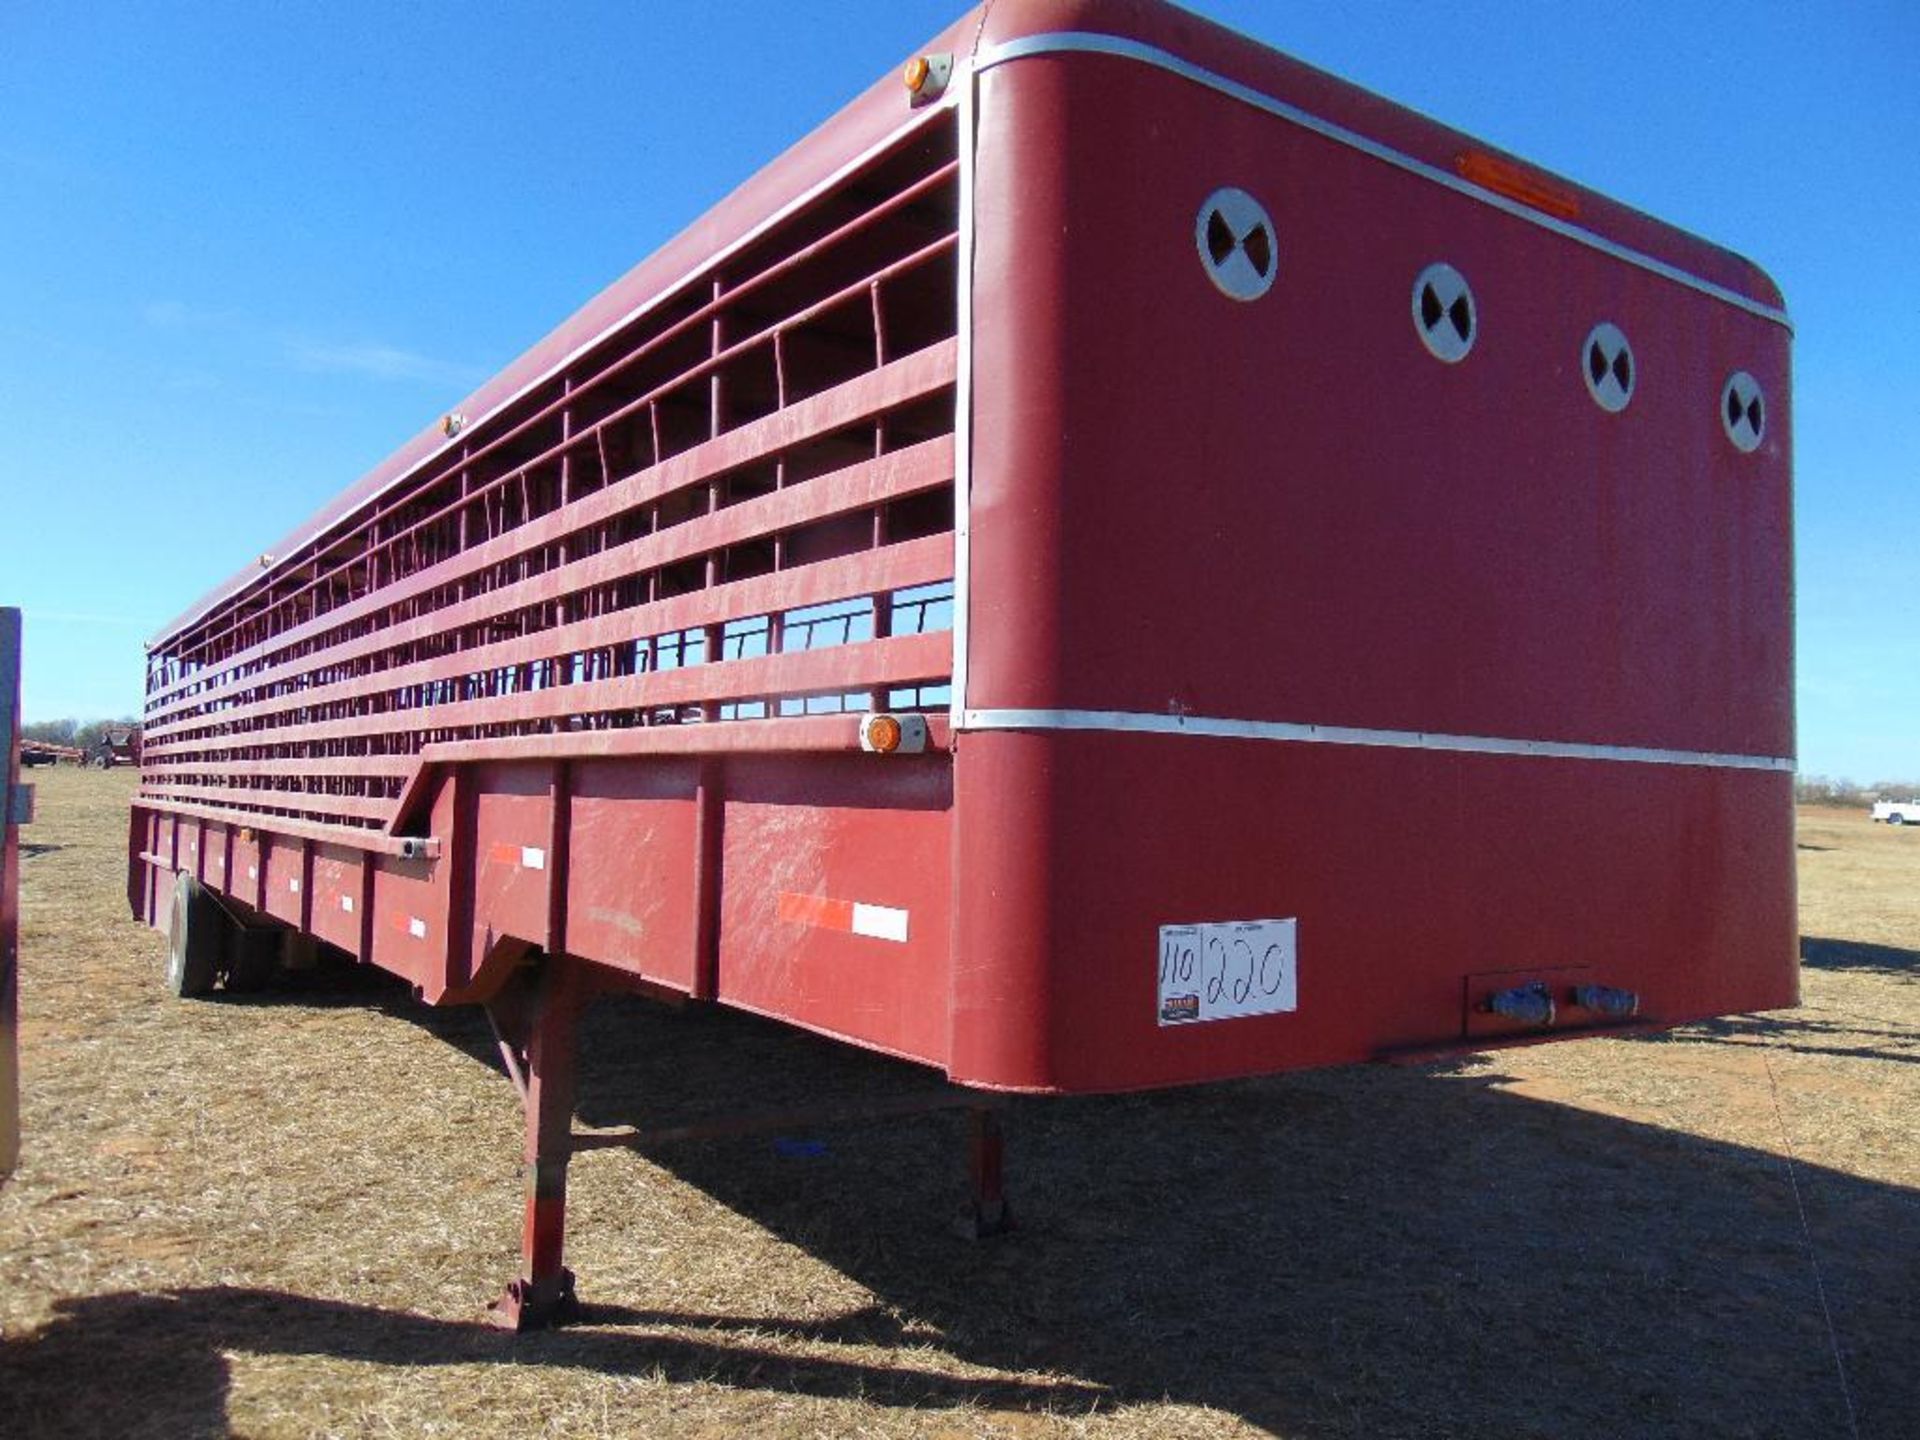 2007 Gooseneck S/A 43' Ground Load Livestock Trailer, s/n 16gs743147b060888, 3 cut gates, sliding - Image 2 of 6